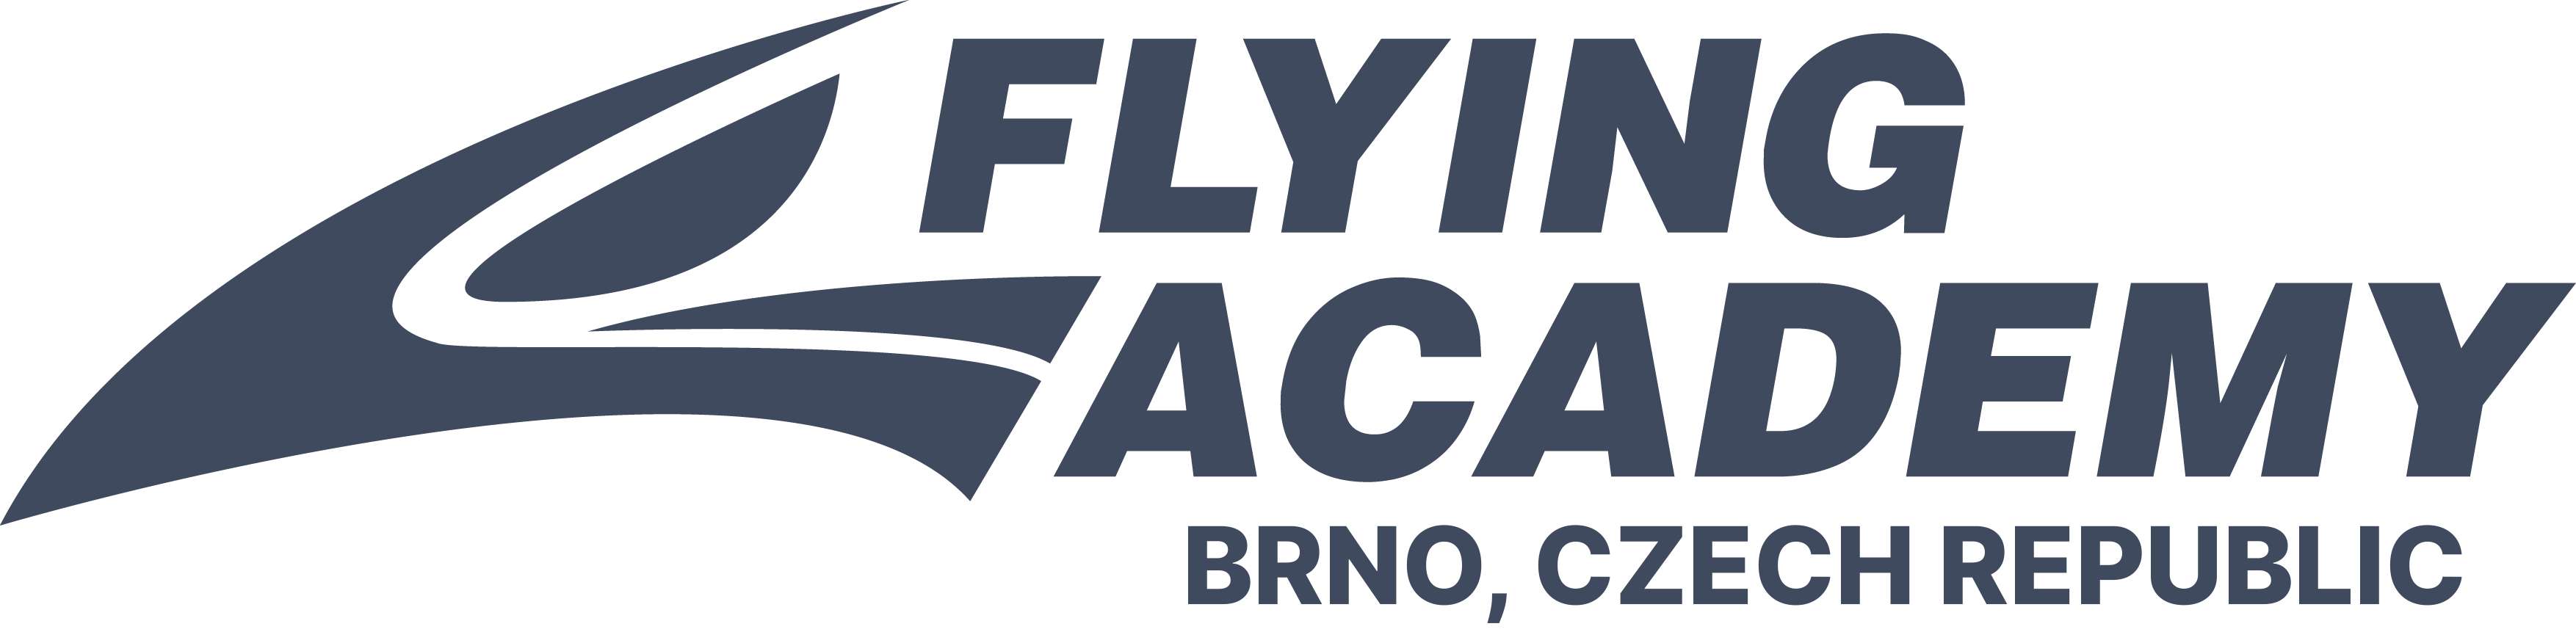 Flying Academy Brno | Professional Pilot Training